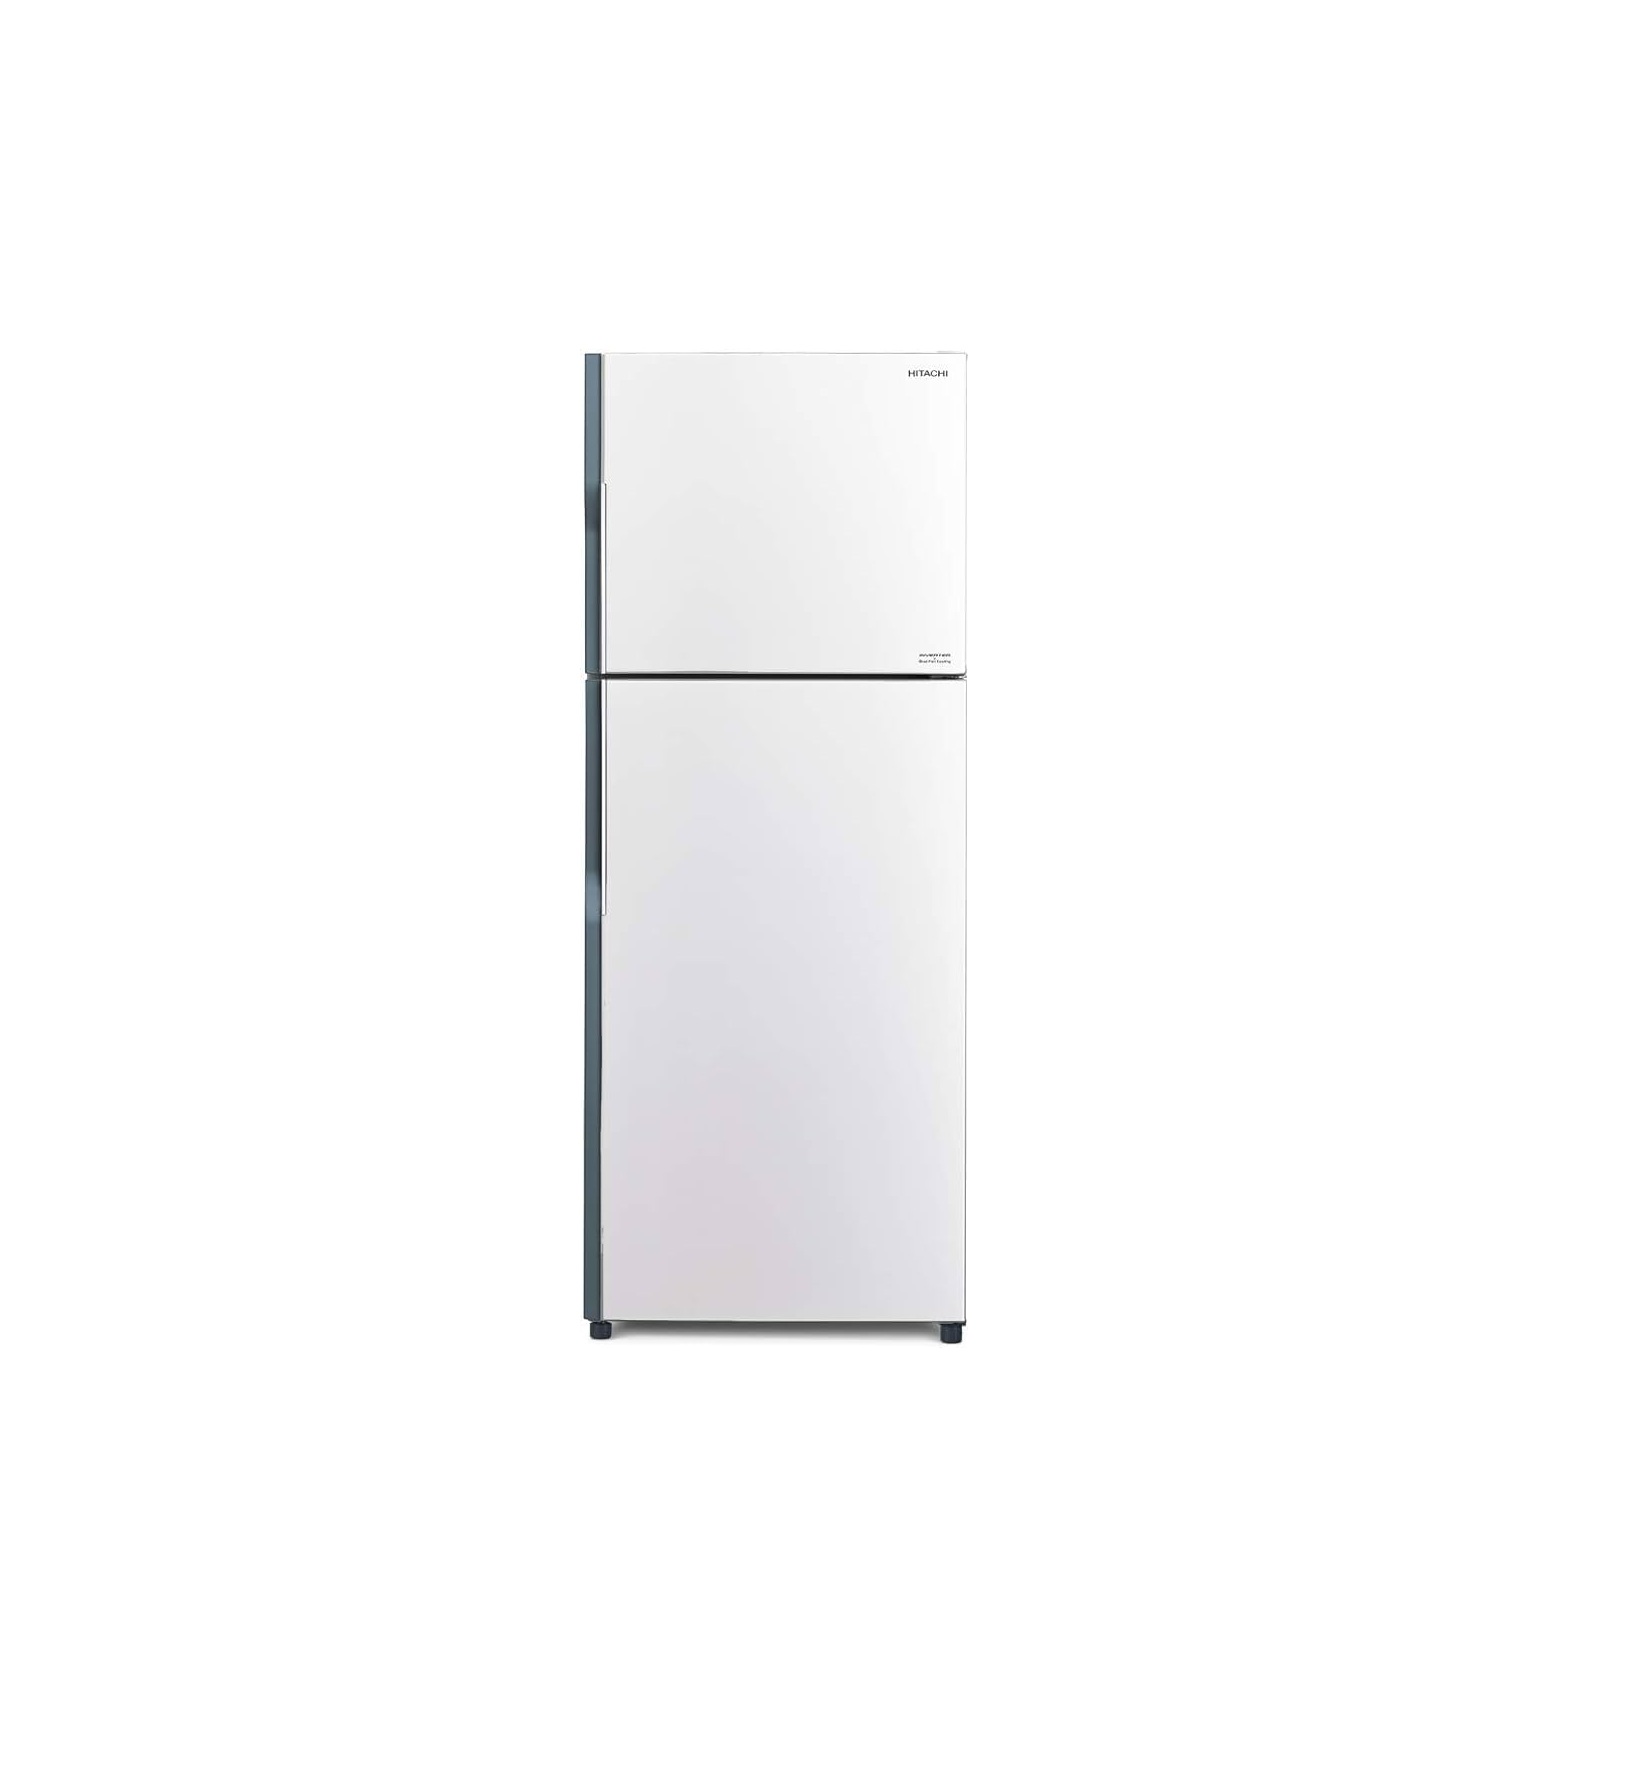 Hitachi Top Mount Refrigerator, 380L, 2 Doors, HxWxD: 1672x600x663mm, White, RH380PL4PW